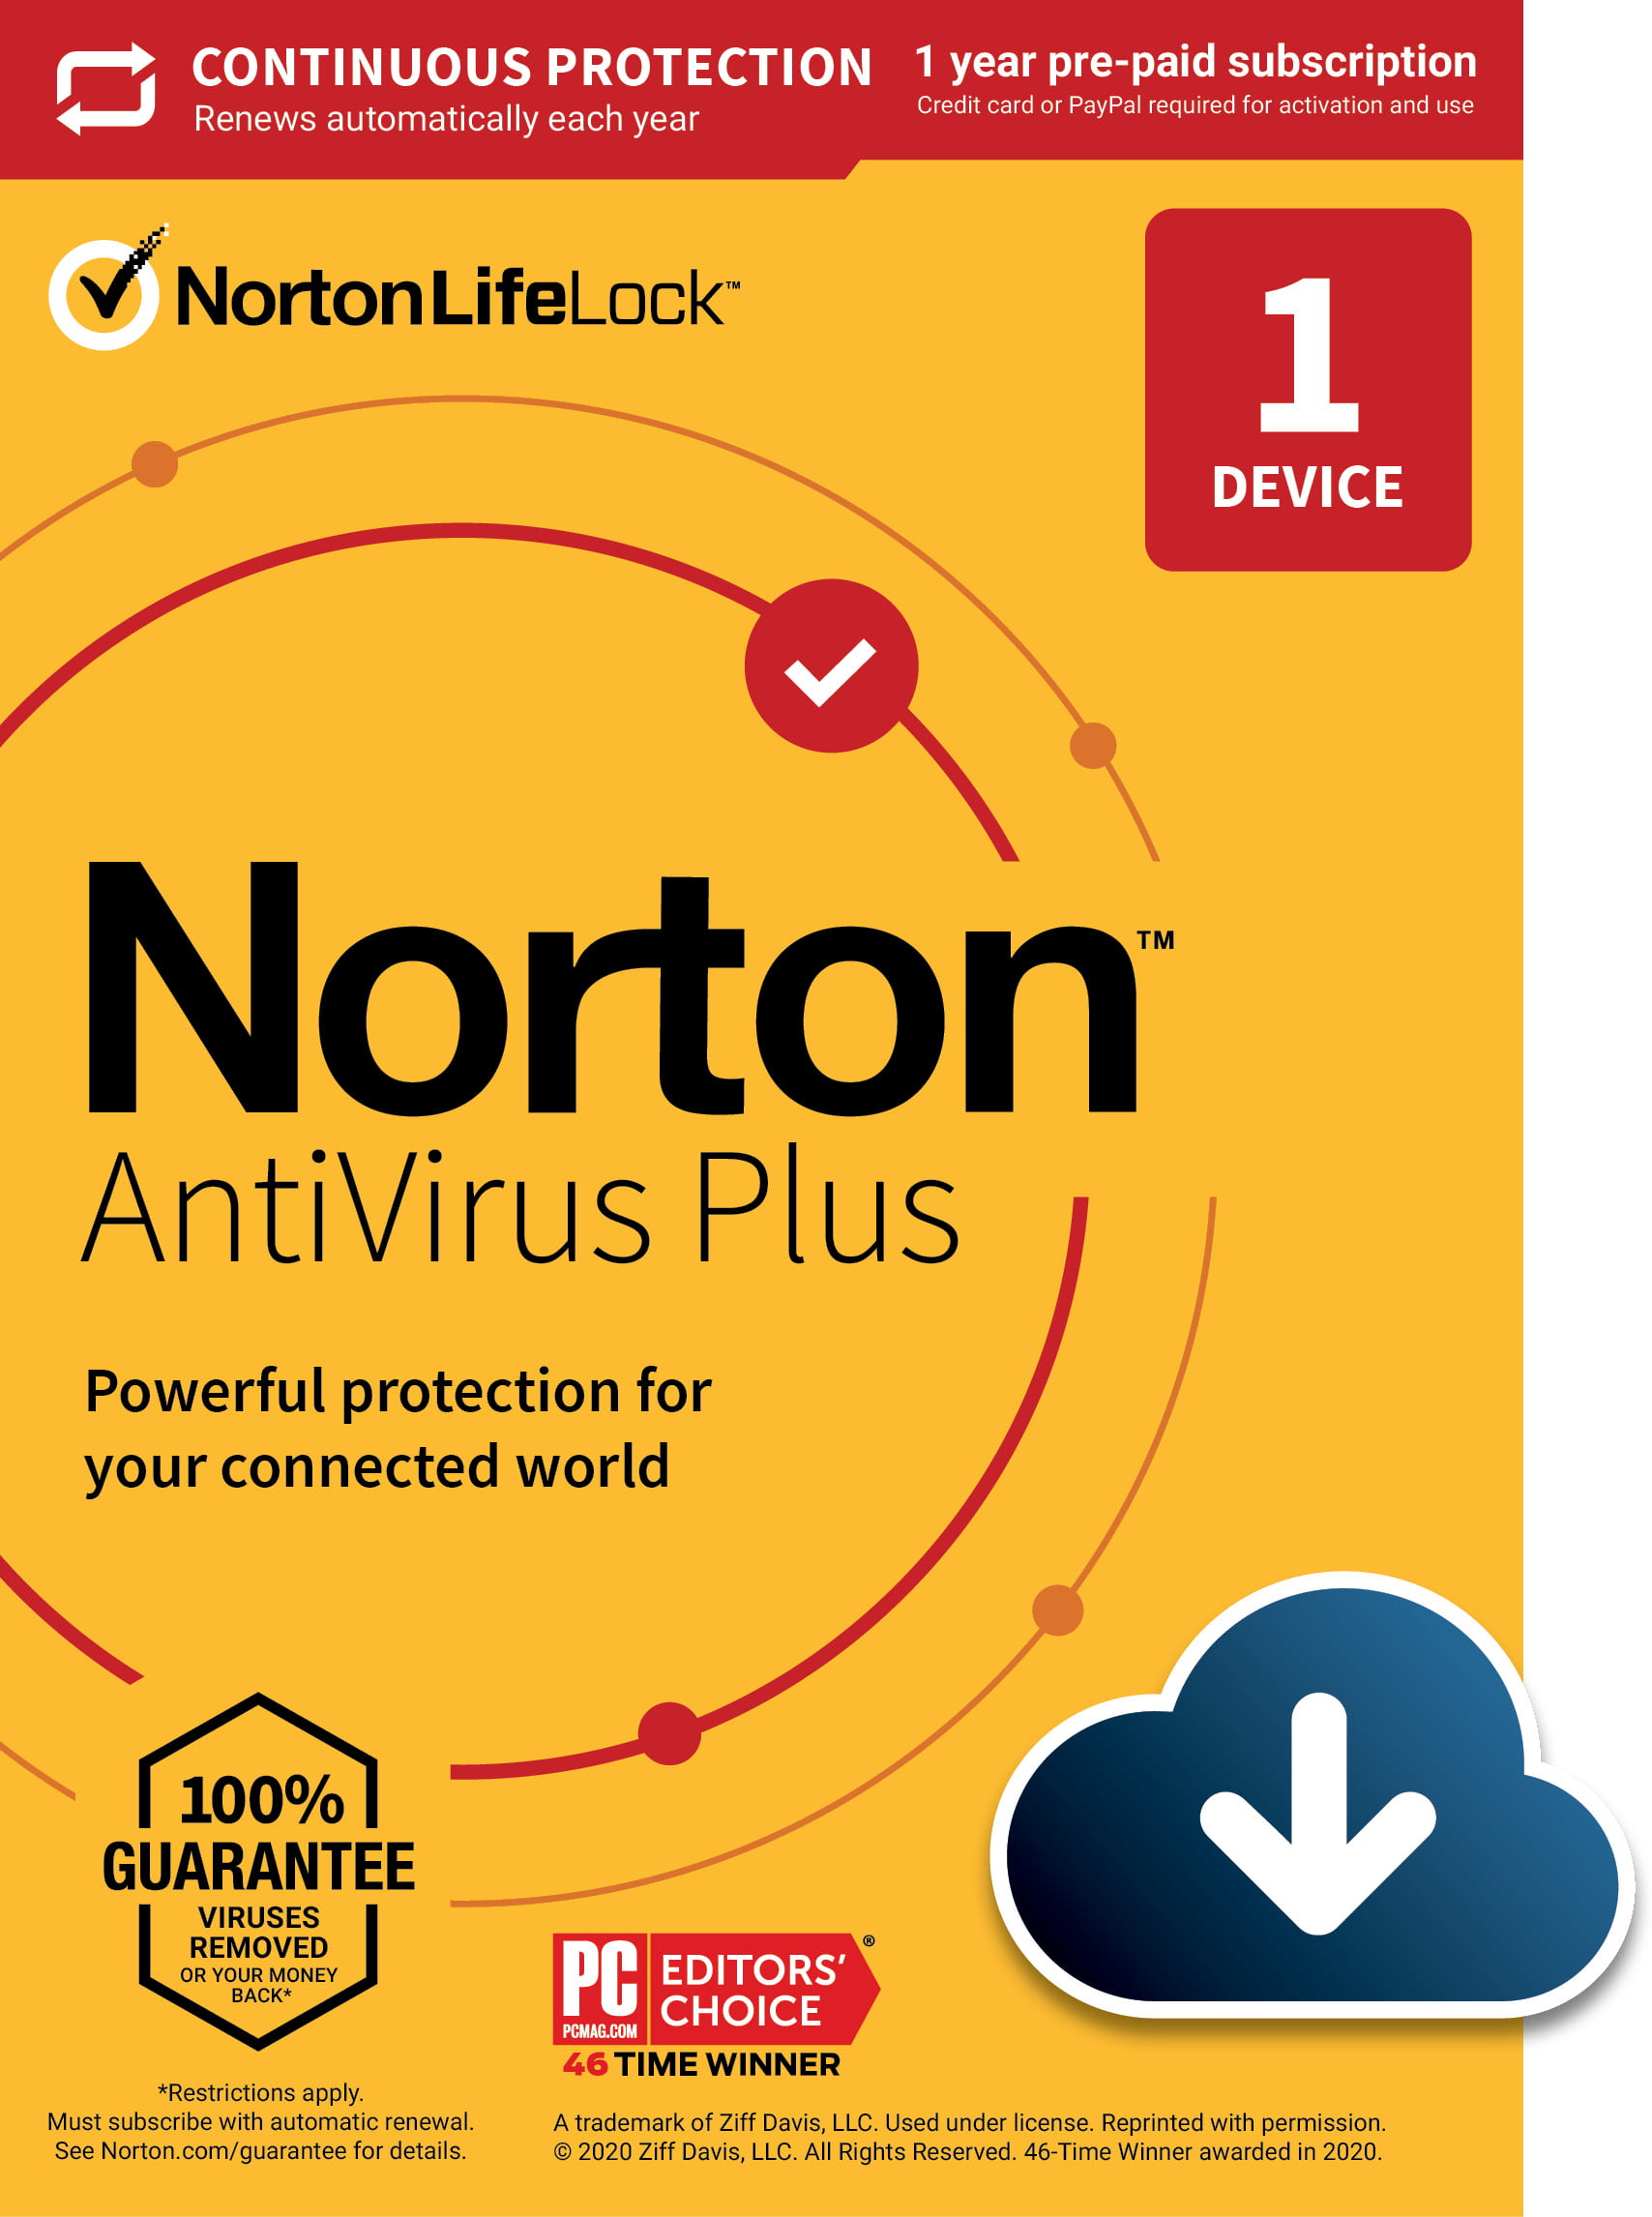 free antivirus download for 1 year